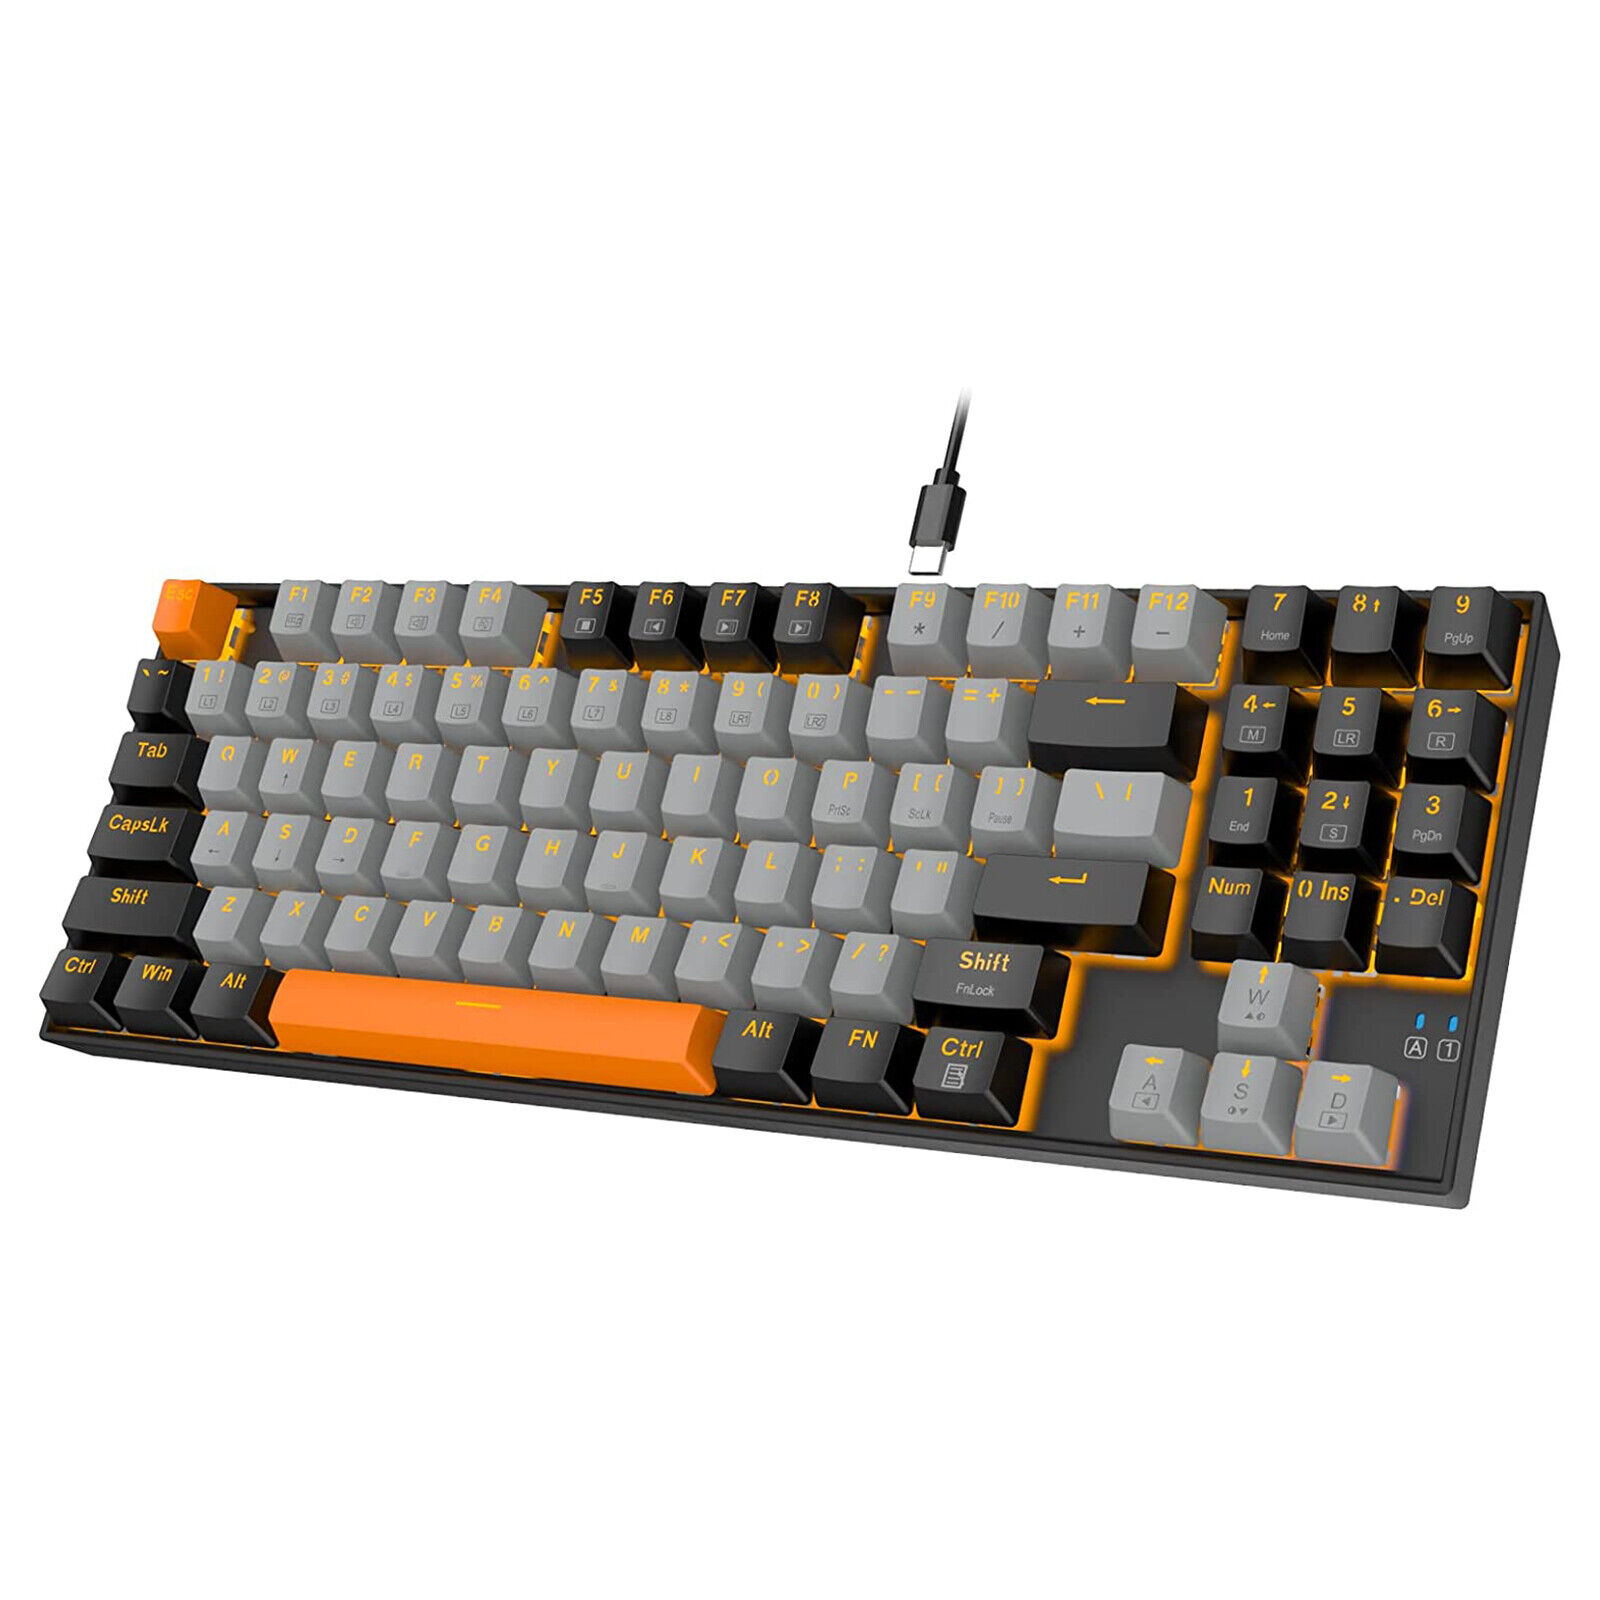 E-YOOSO 89 Keys Mechanical Keyboard, Wired Compact LED Backlit Keyboard for PC